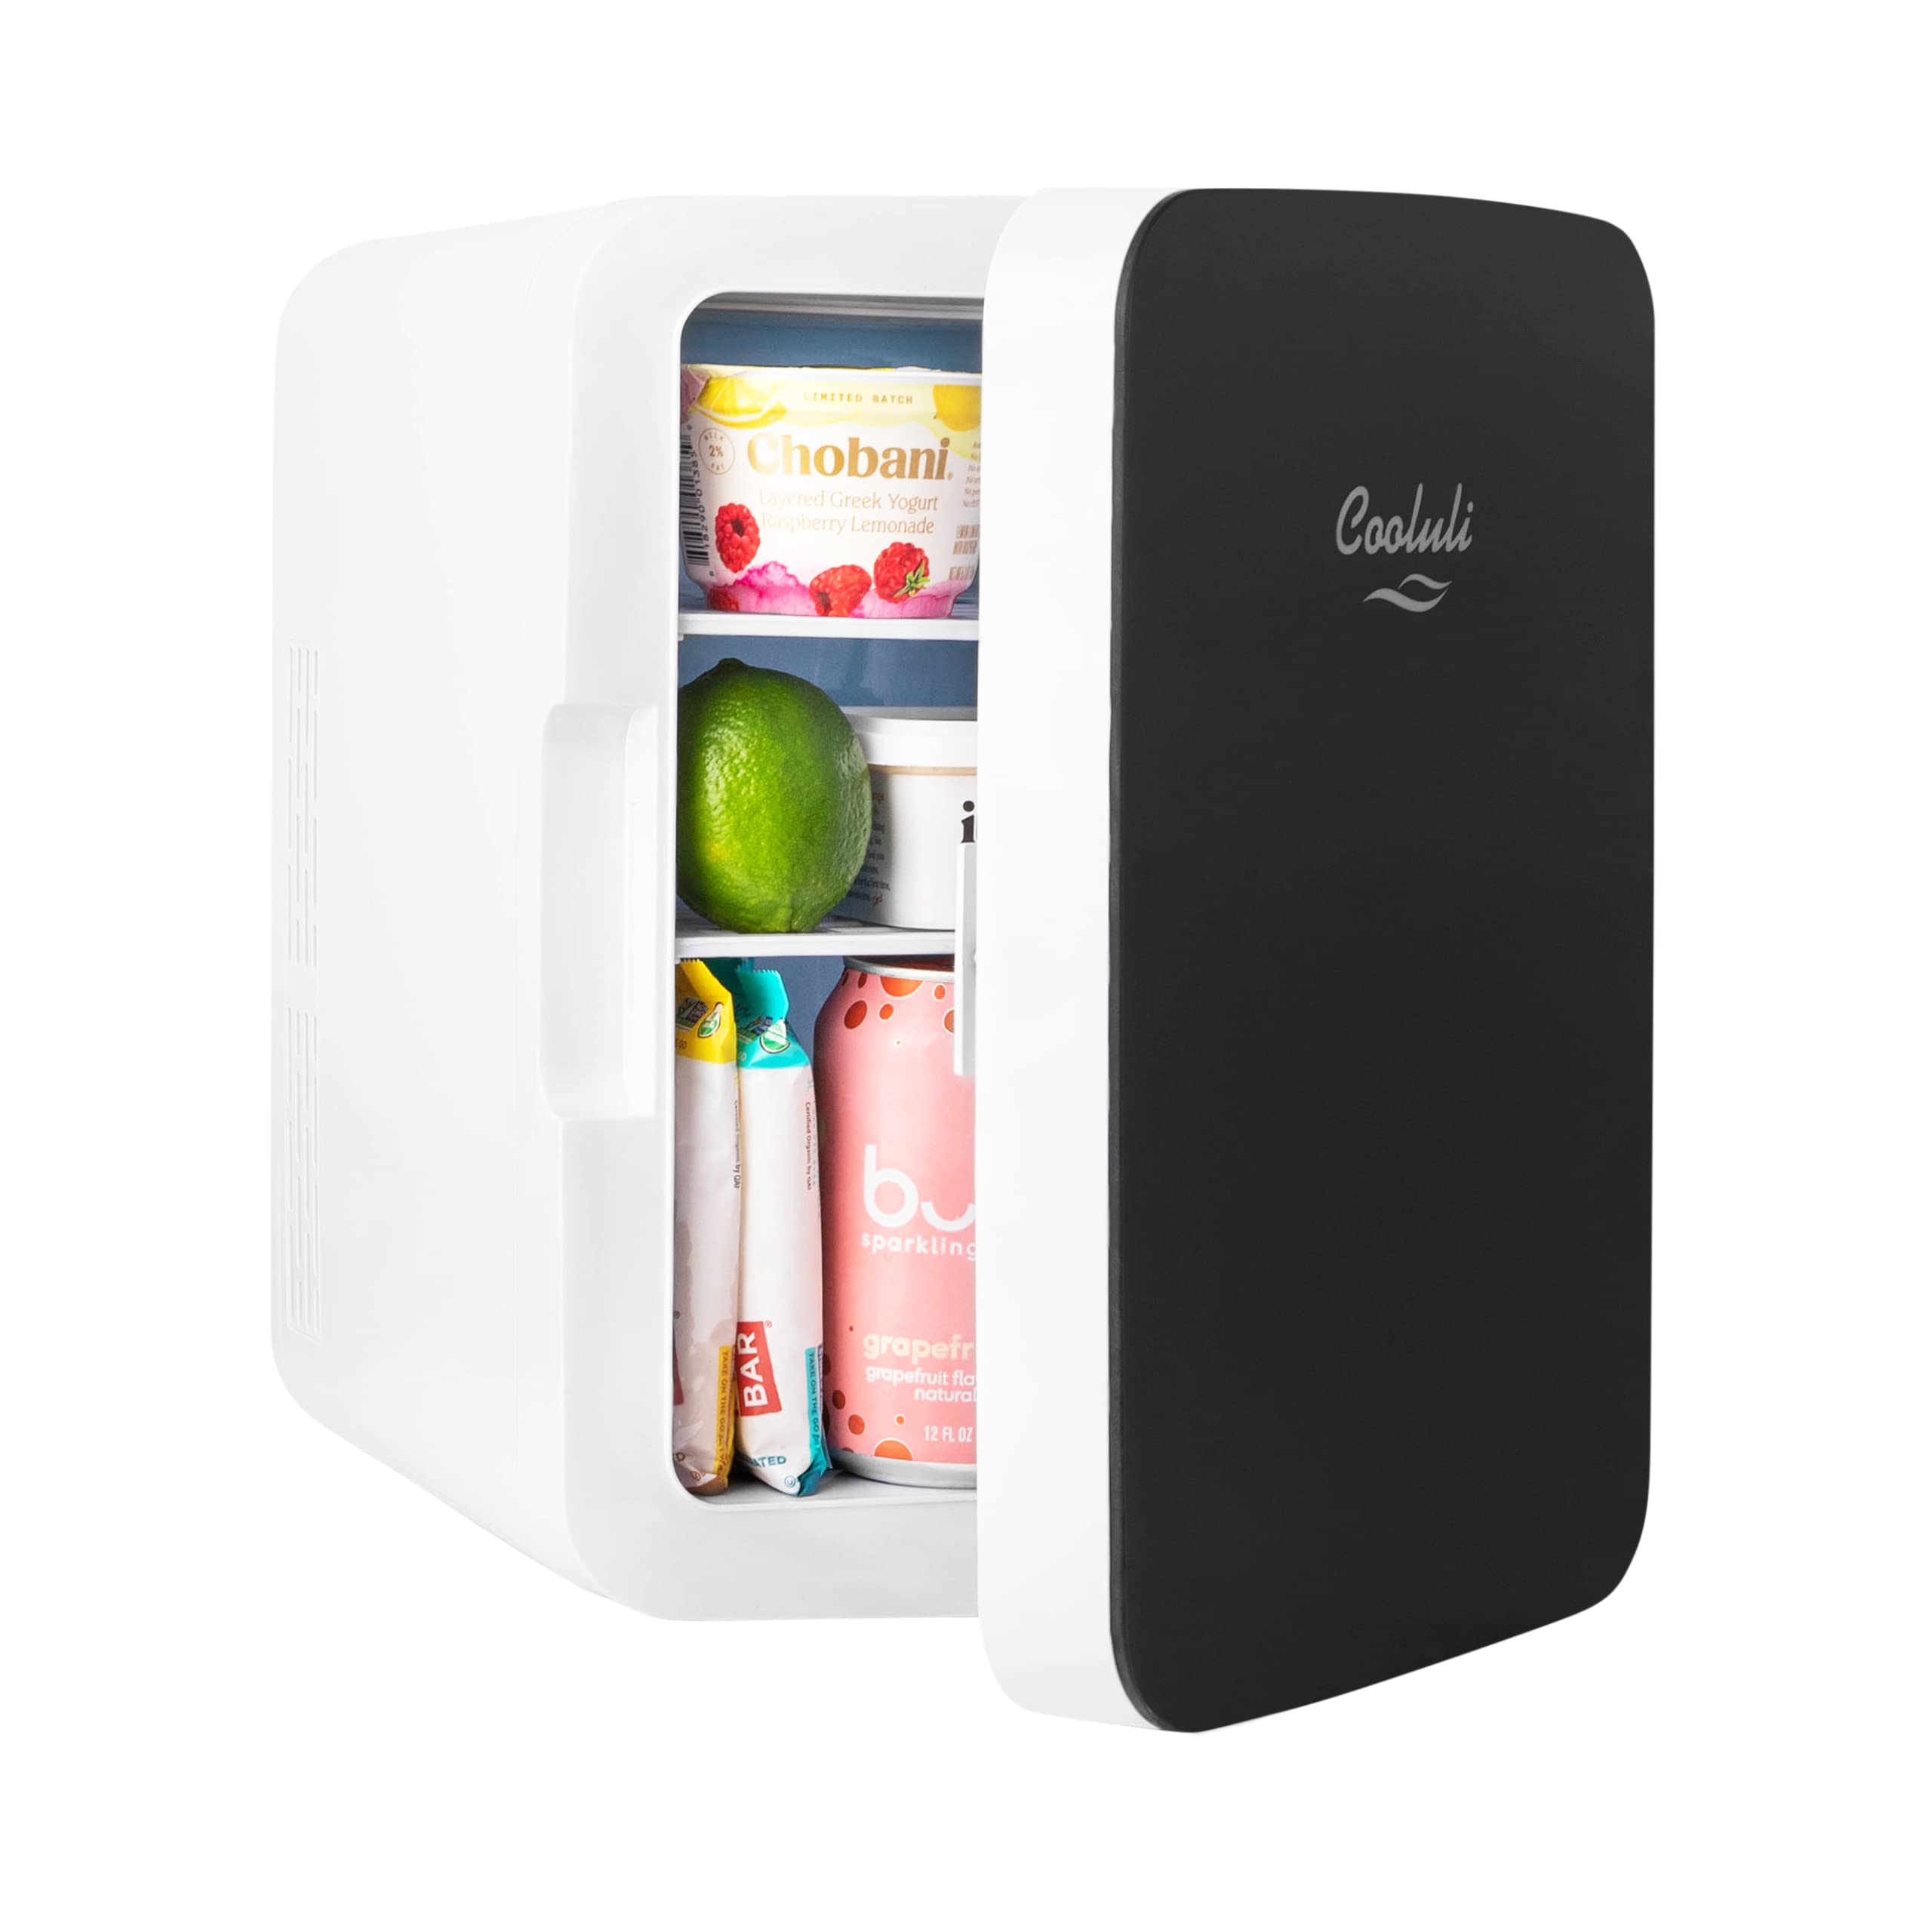 Cooluli Mini Fridge for Bedroom - Car, Office Desk & College Dorm Room - 12v Portable Cooler & Warmer for Food, Drinks, Skincare, Beauty & Makeup - AC/DC Small Refrigerator  - Good